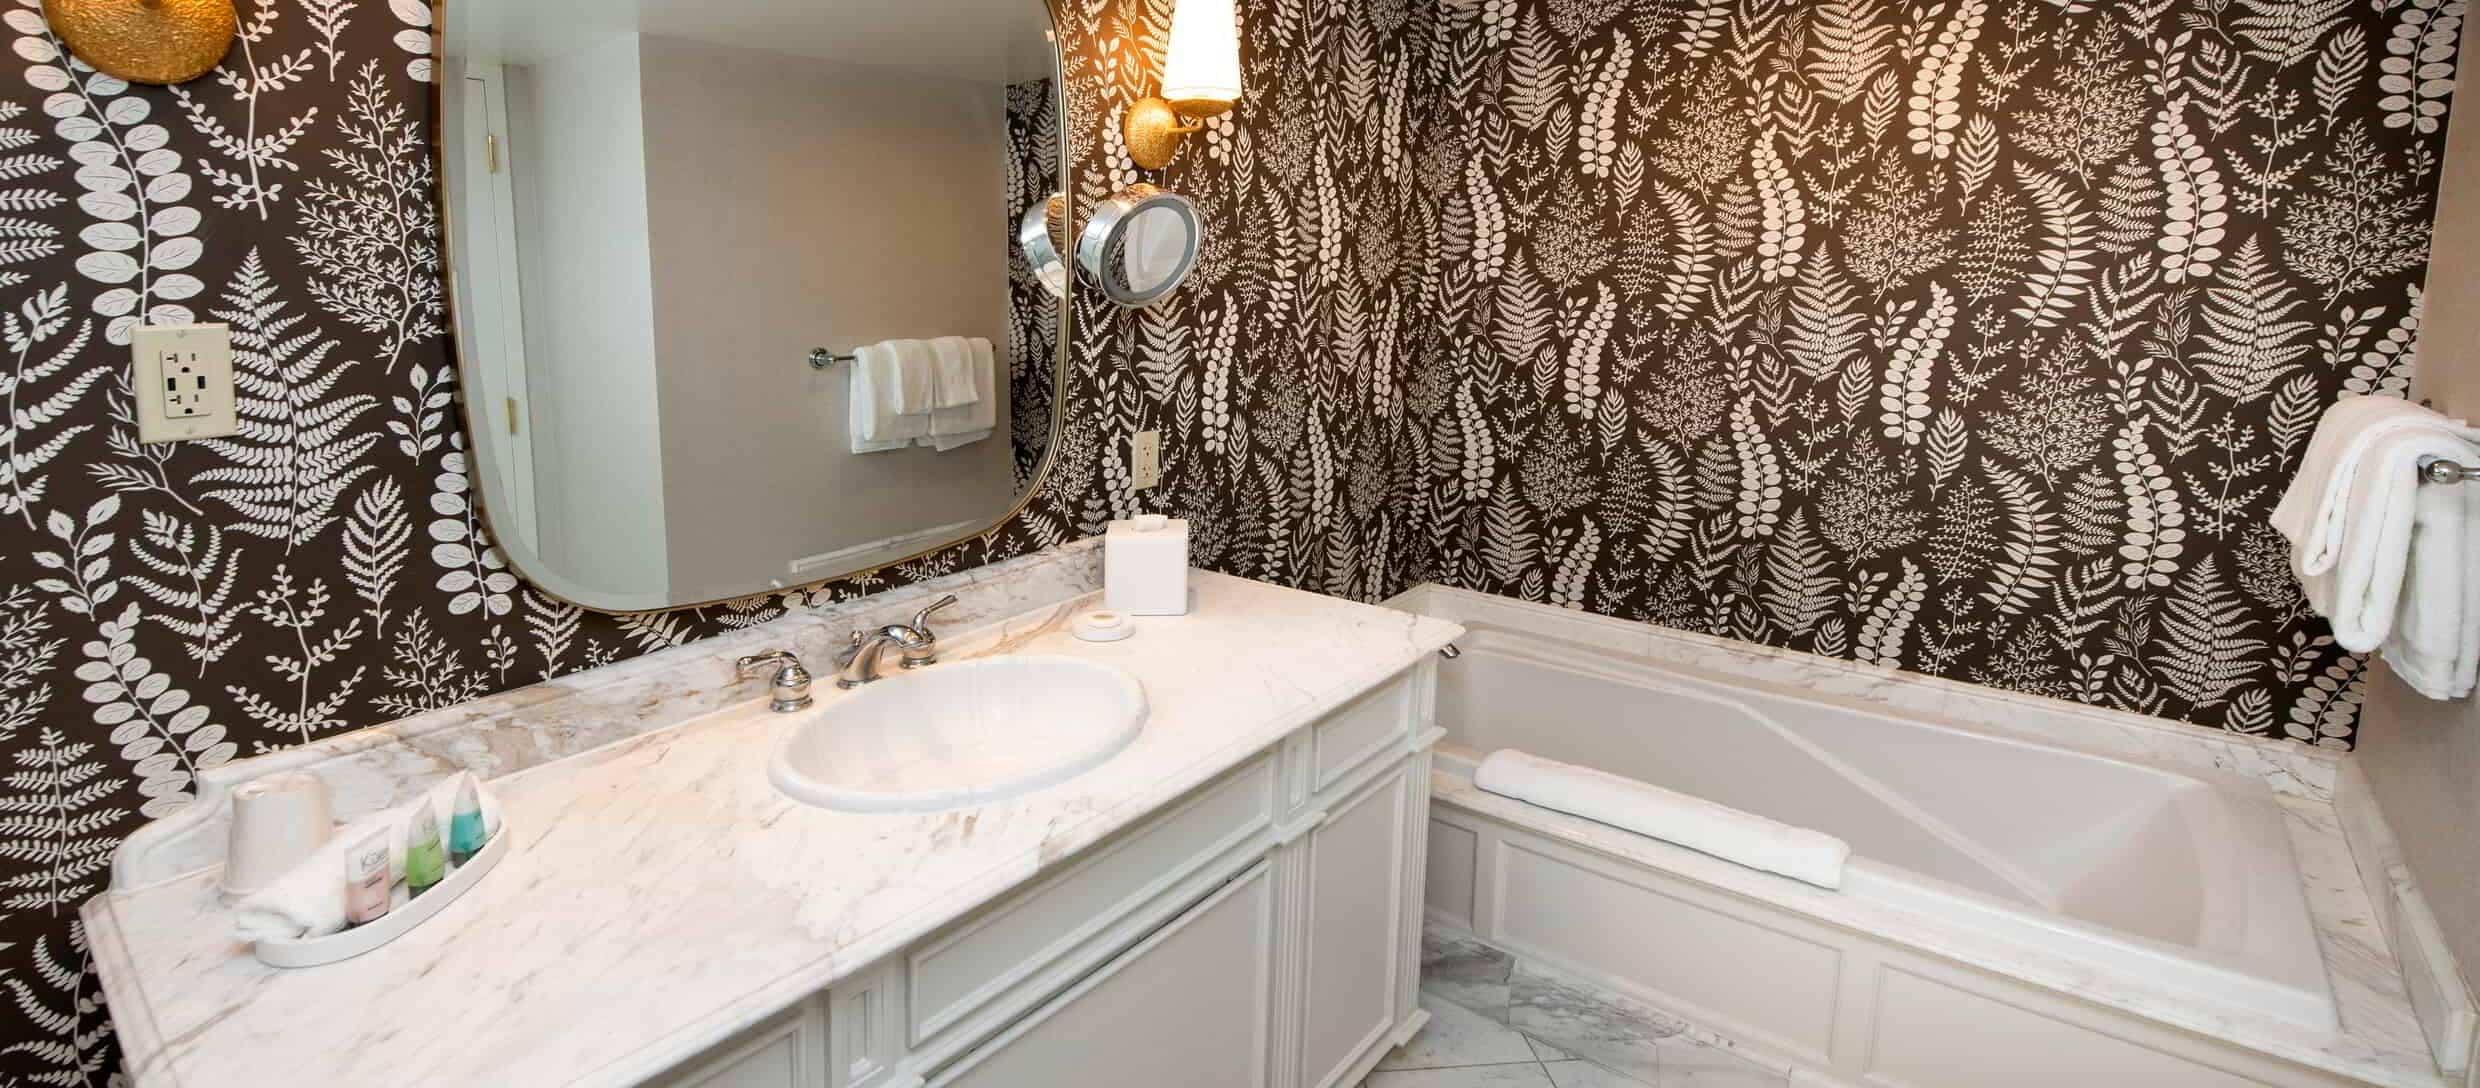 beau-rivage-hotel-deluxe-bathroom.jpg.image.2480.1088.high